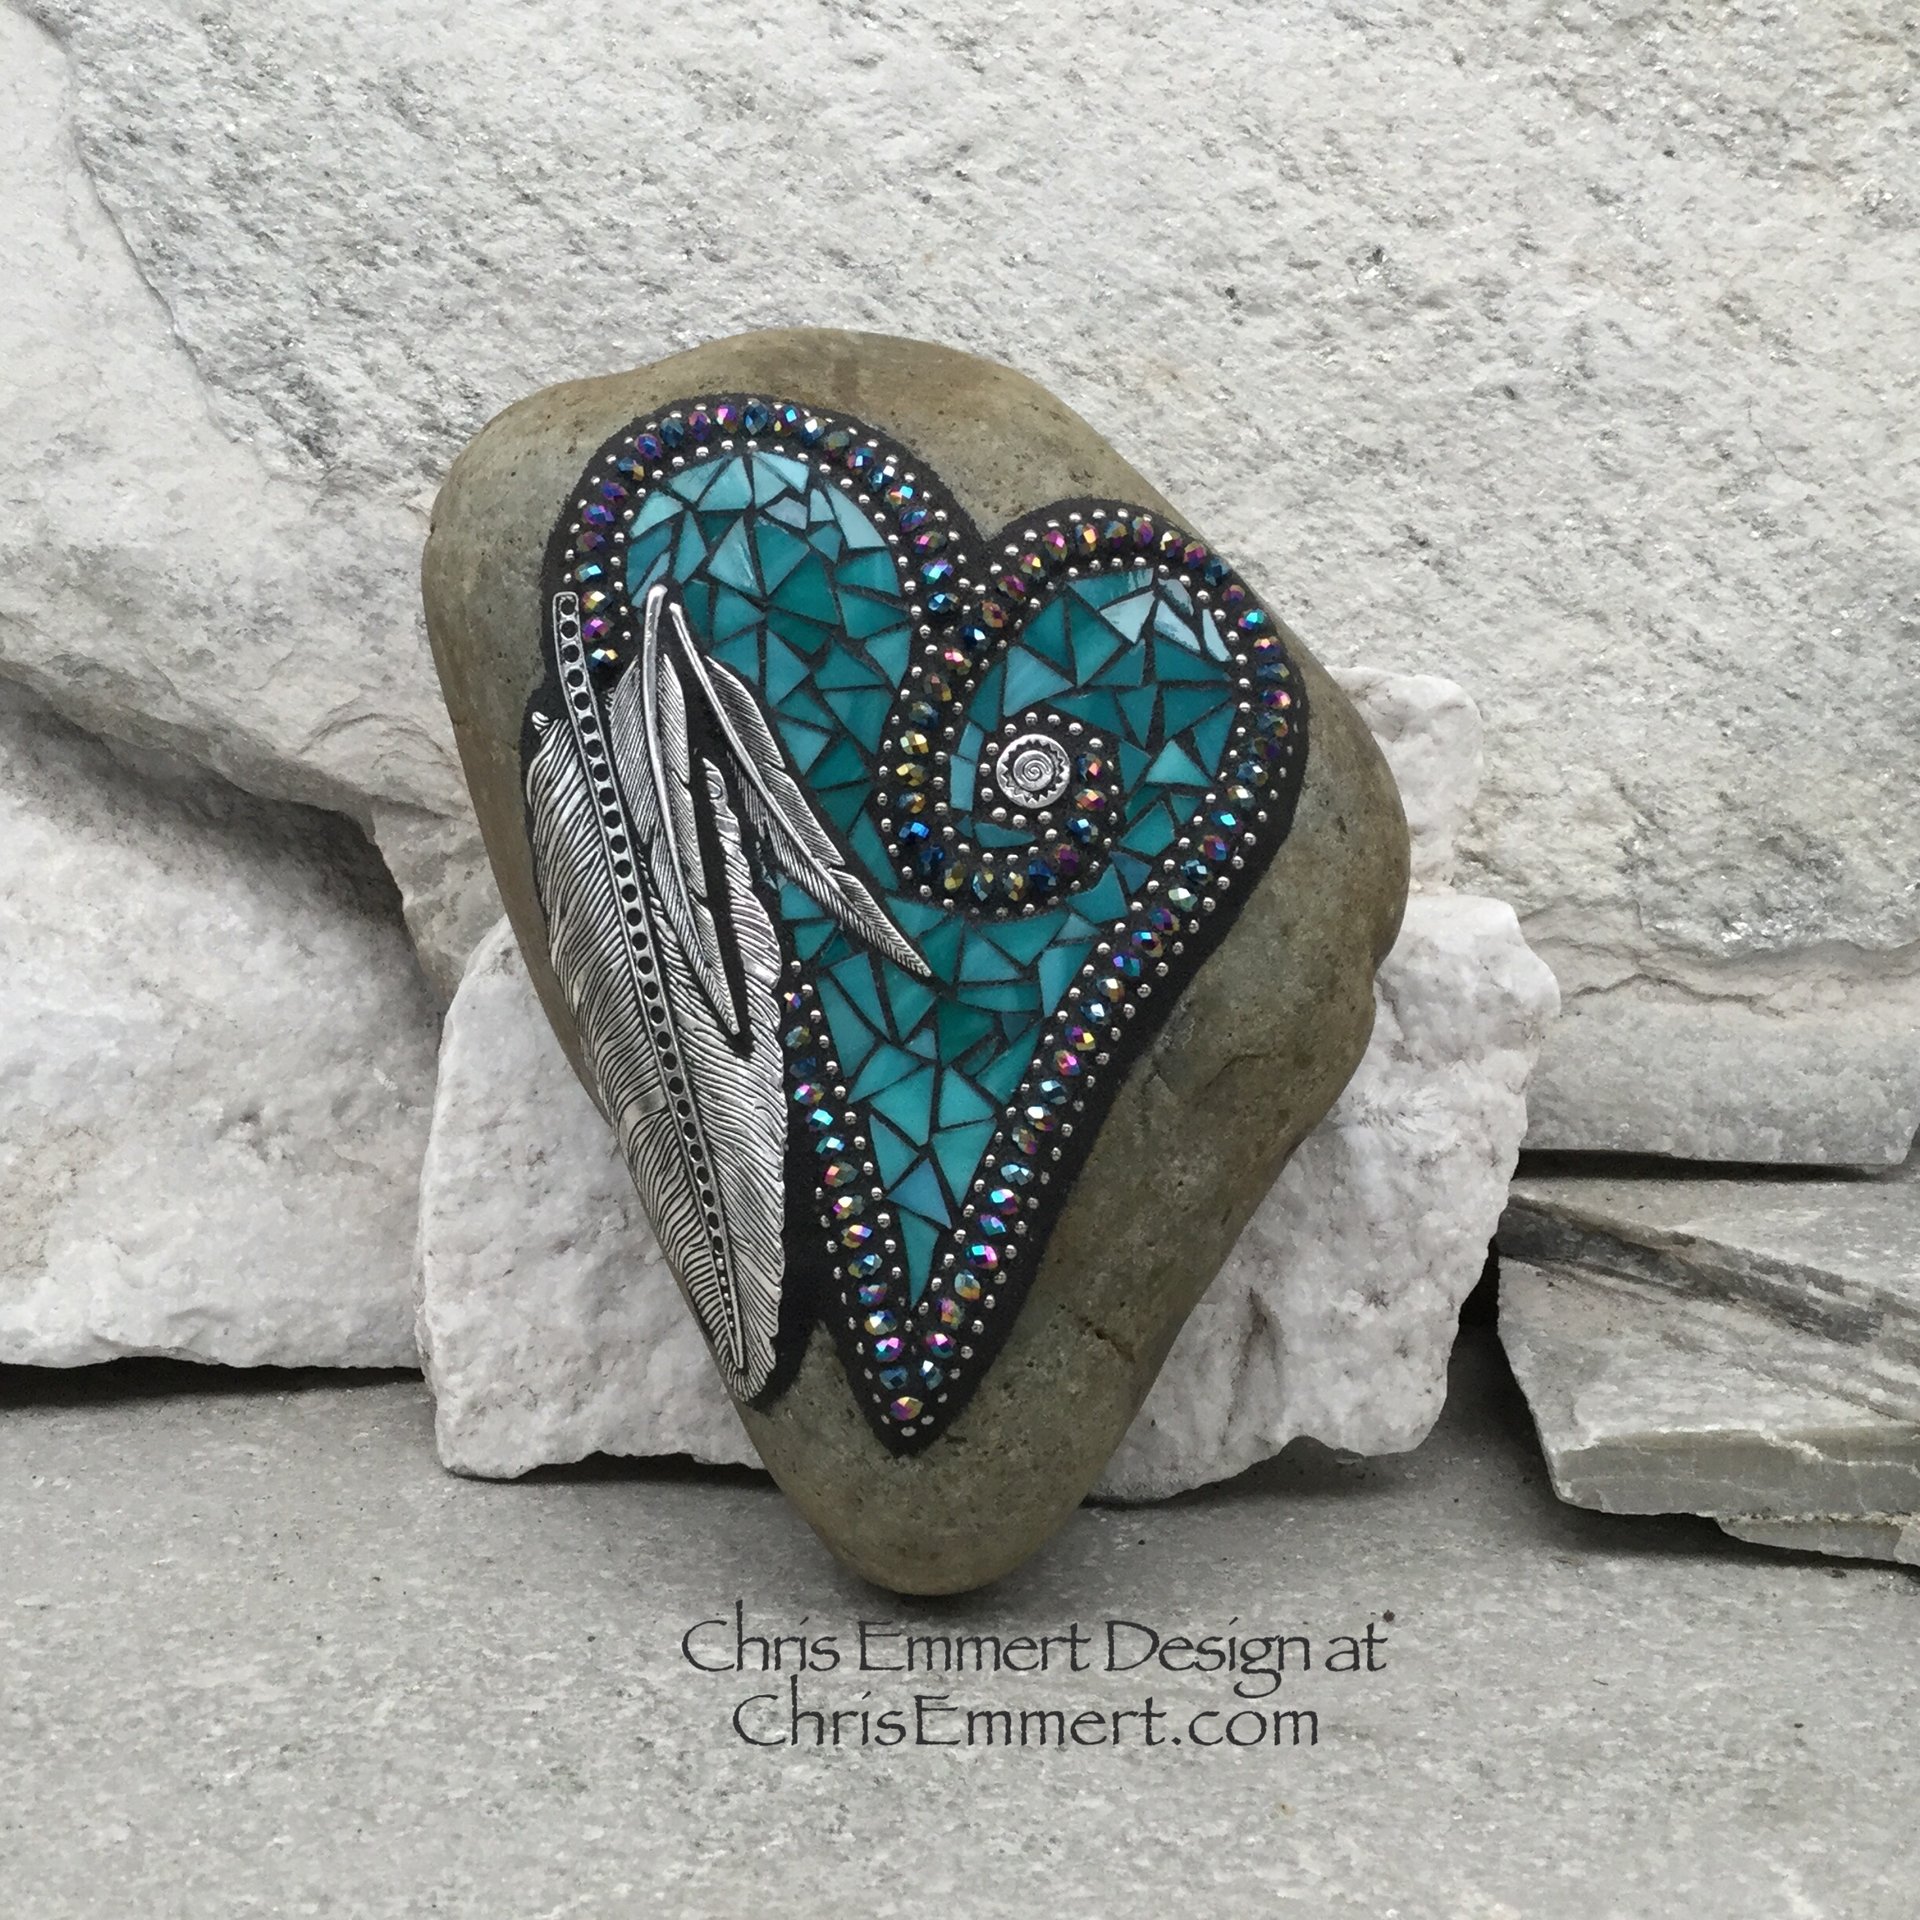 Turquoise Mosaic Heart, Feathers, Mosaic Rock, Mosaic Garden Stone,